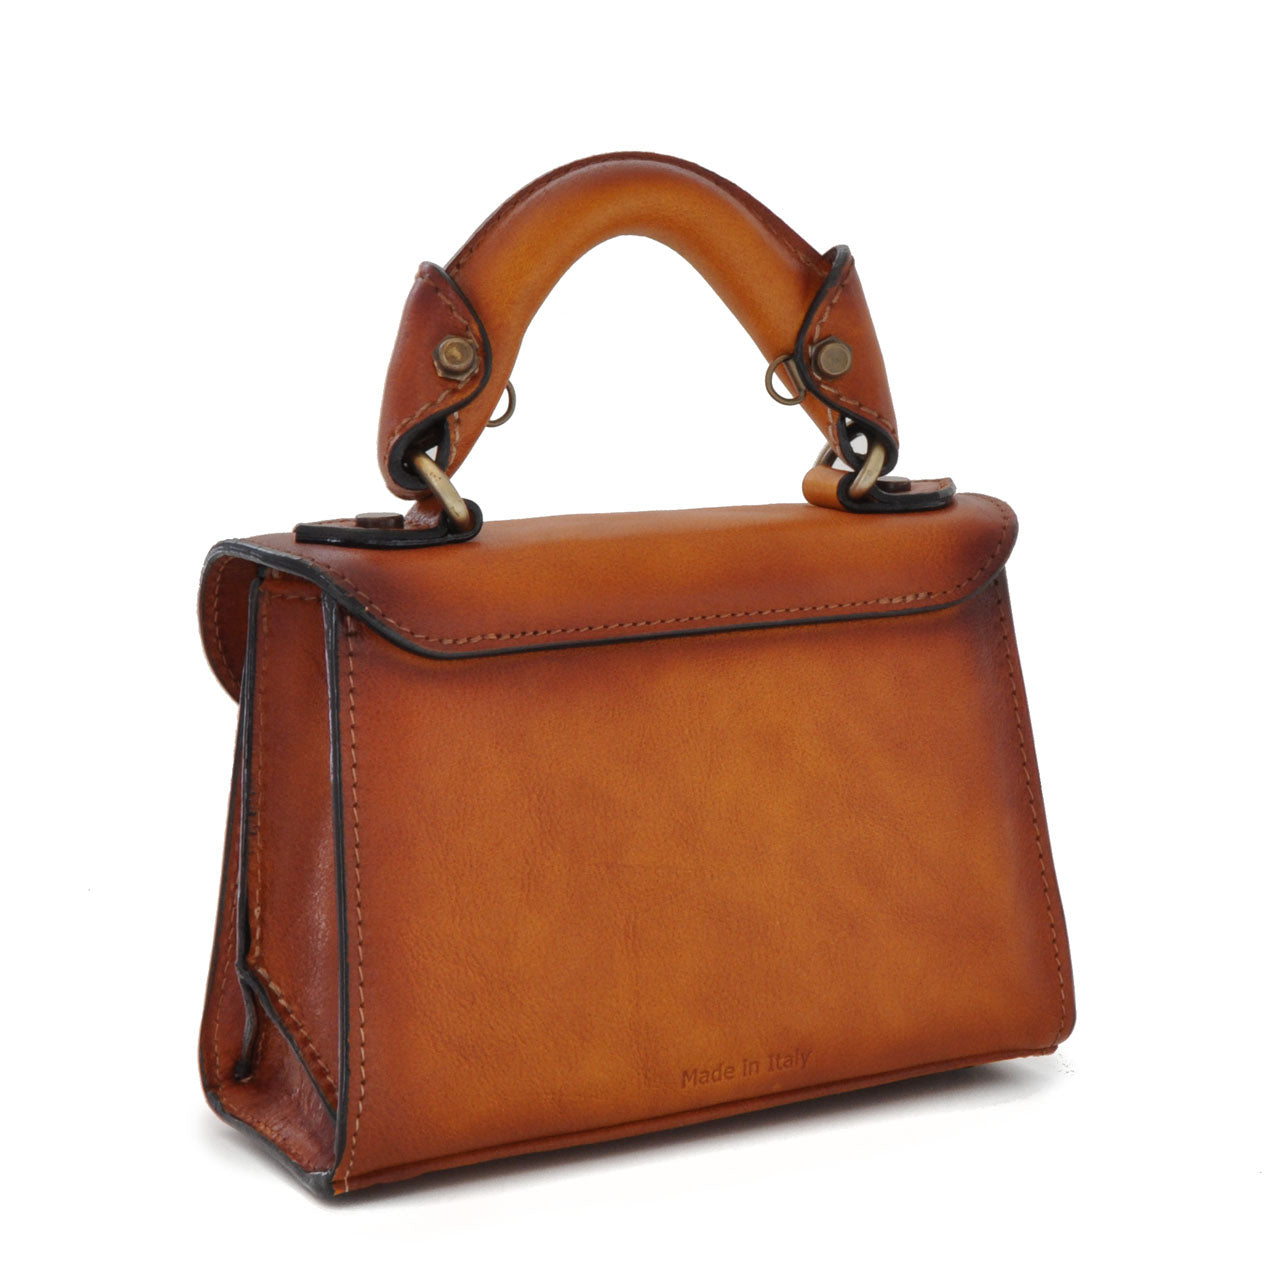 Pratesi Lucignano Small Bruce Handbag in genuine Italian leather - Lucignano Small Handbag Chianti